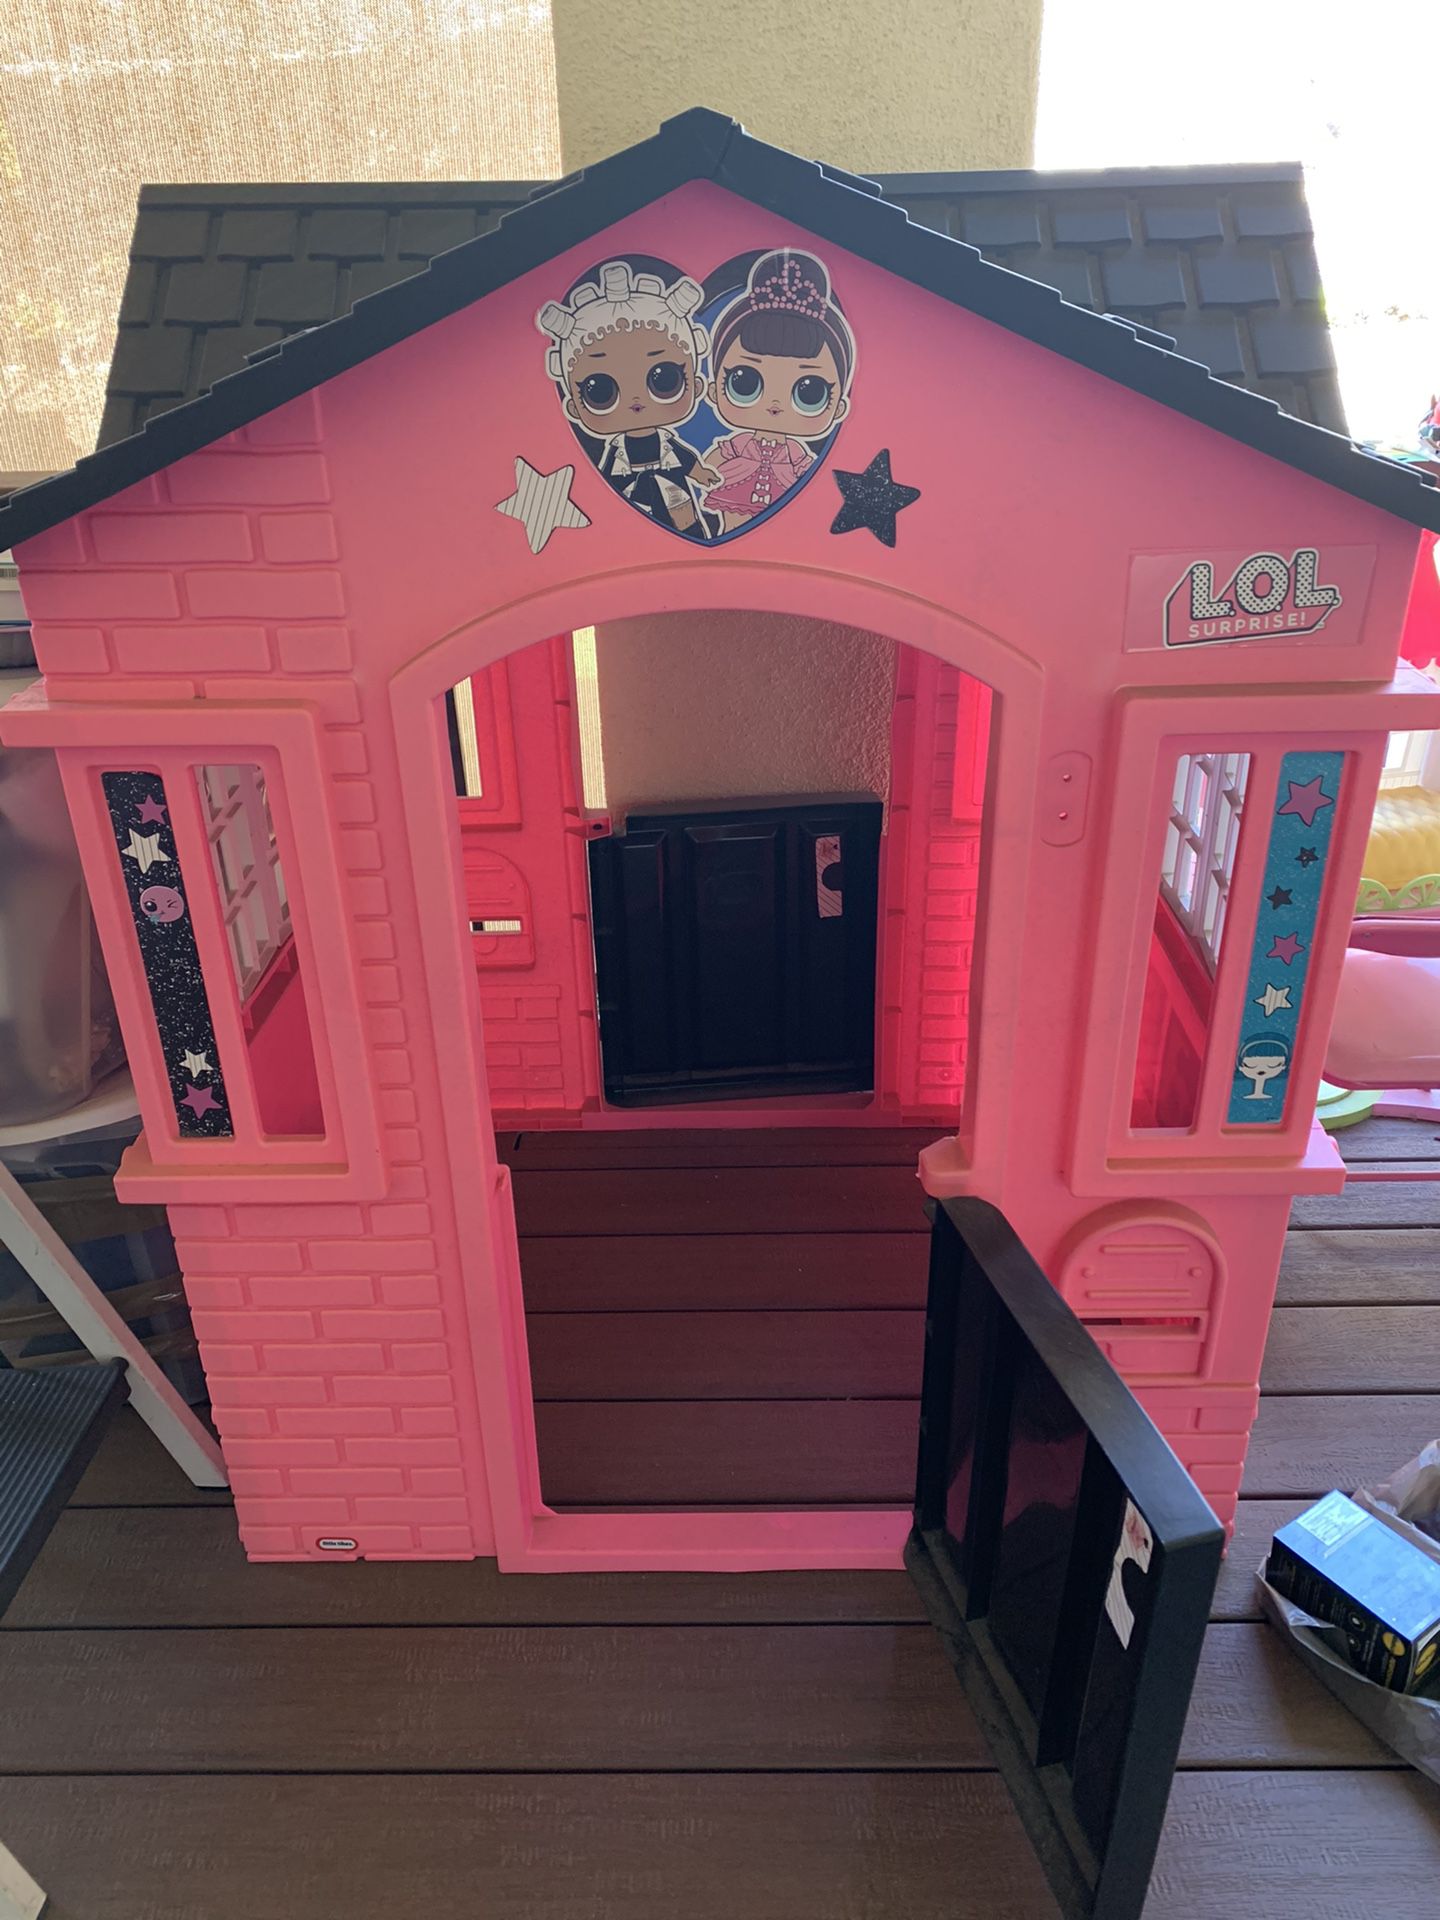 LOL Doll House (playhouse) with toy bonus